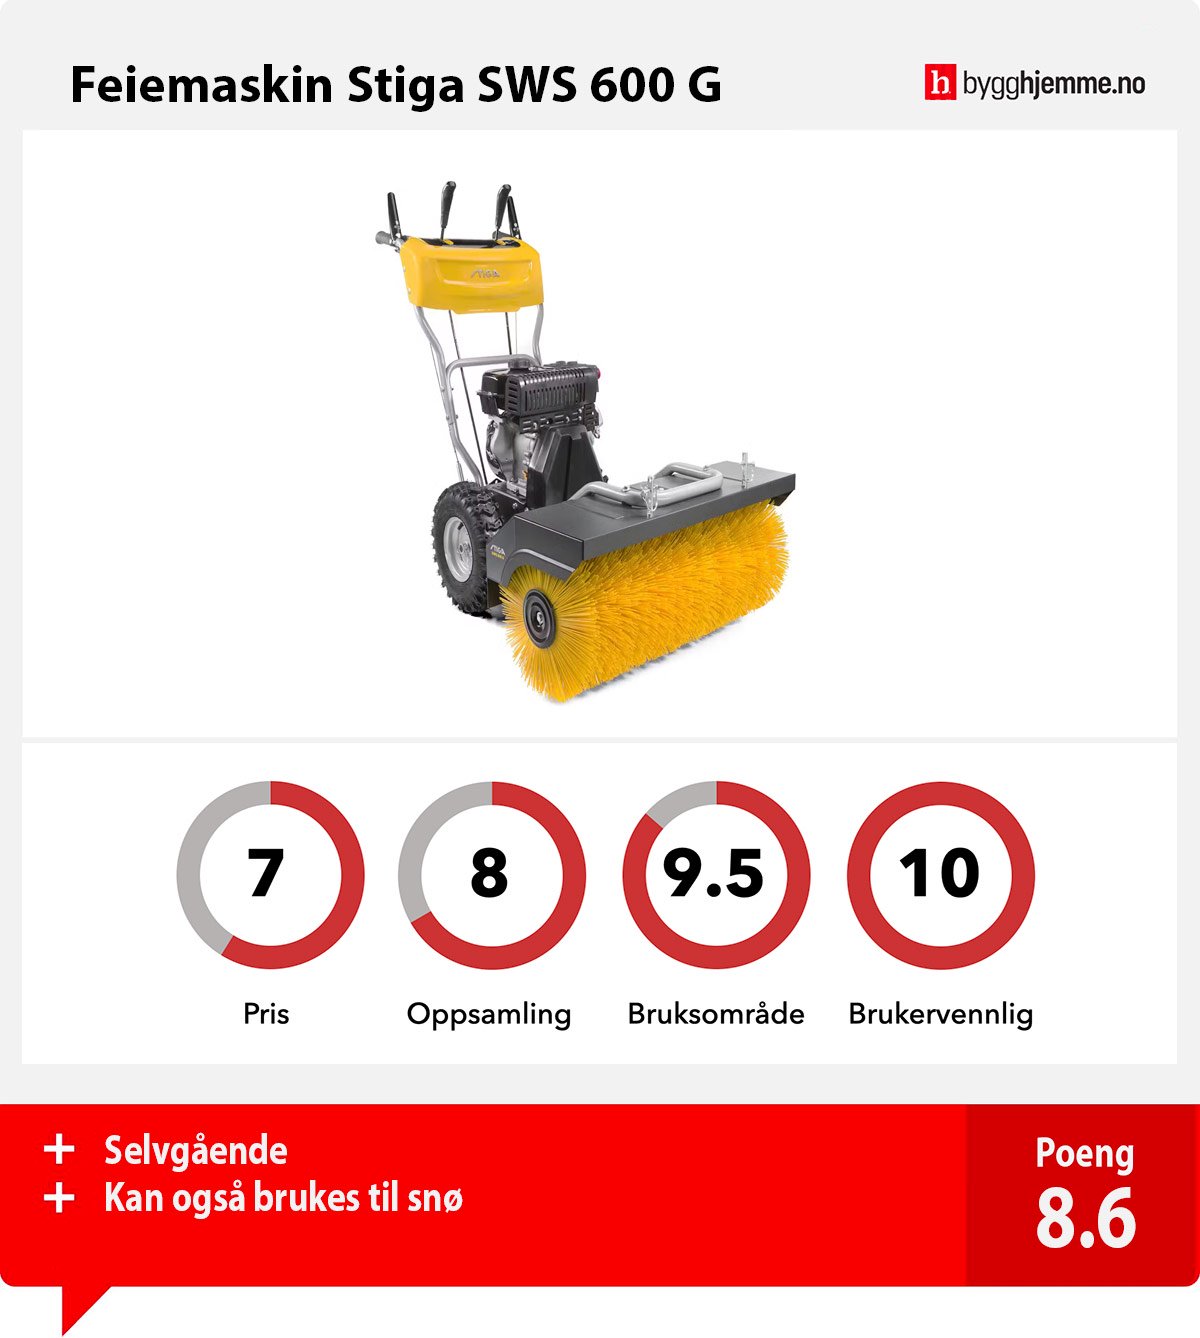 Feiemaskin Stiga SWS 600 G